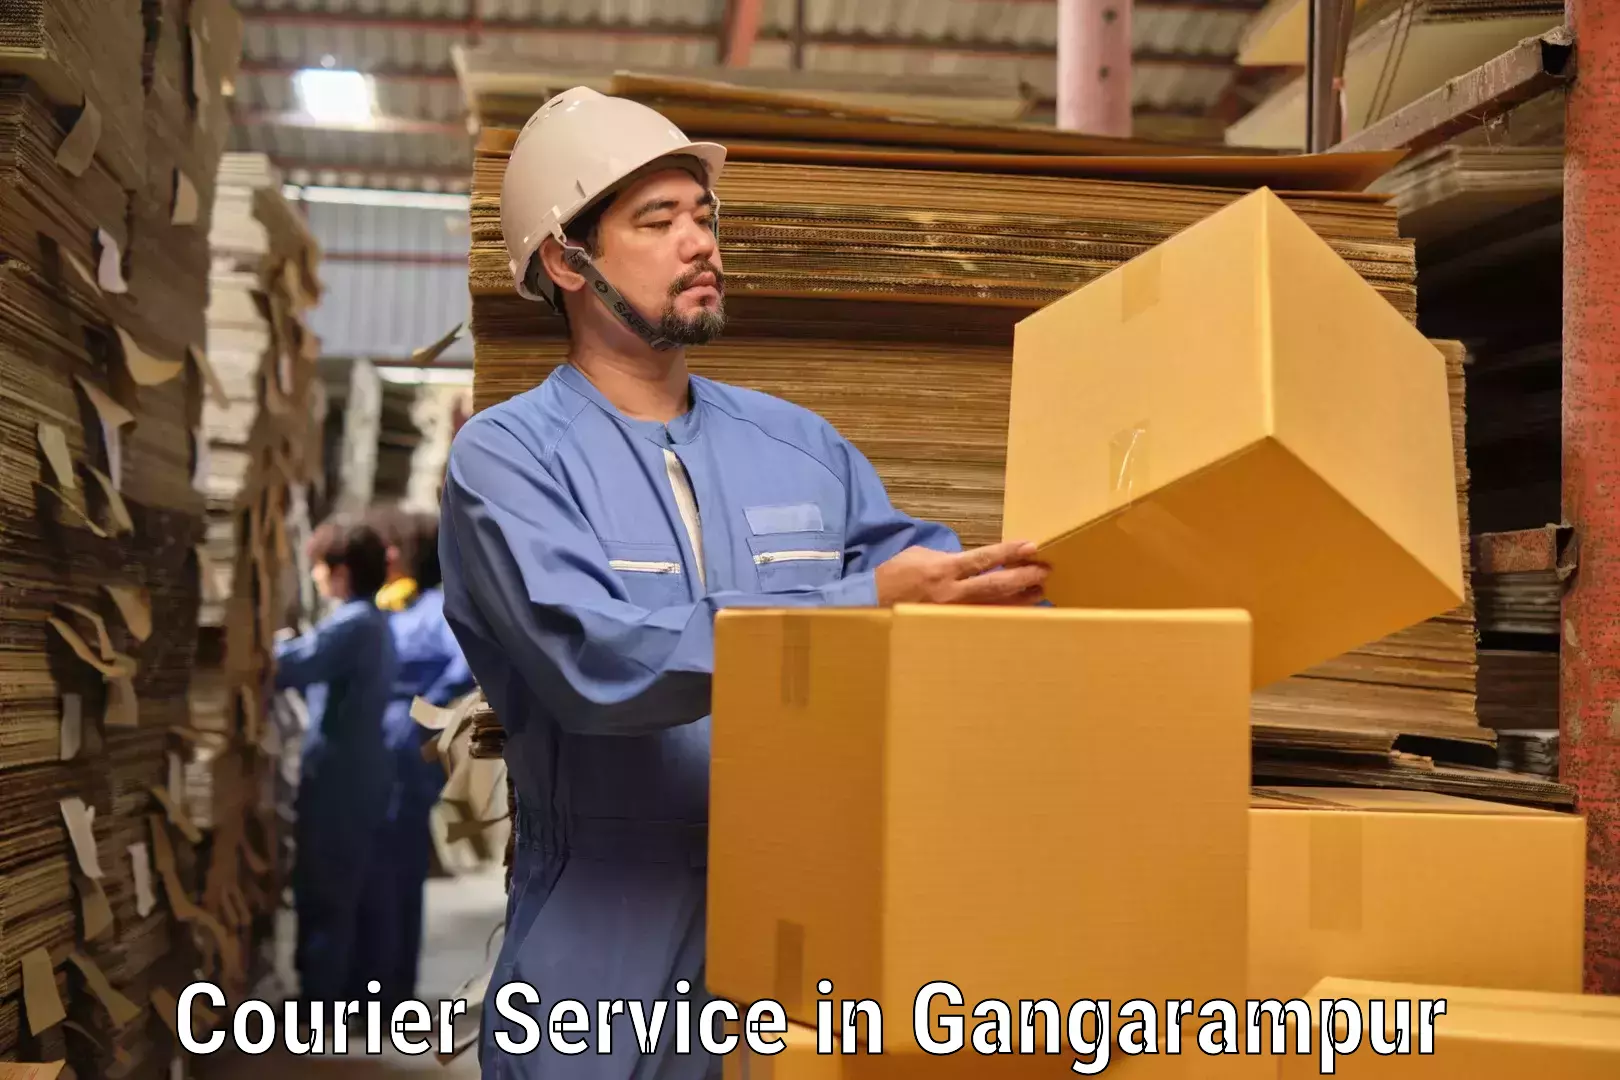 Efficient cargo services in Gangarampur